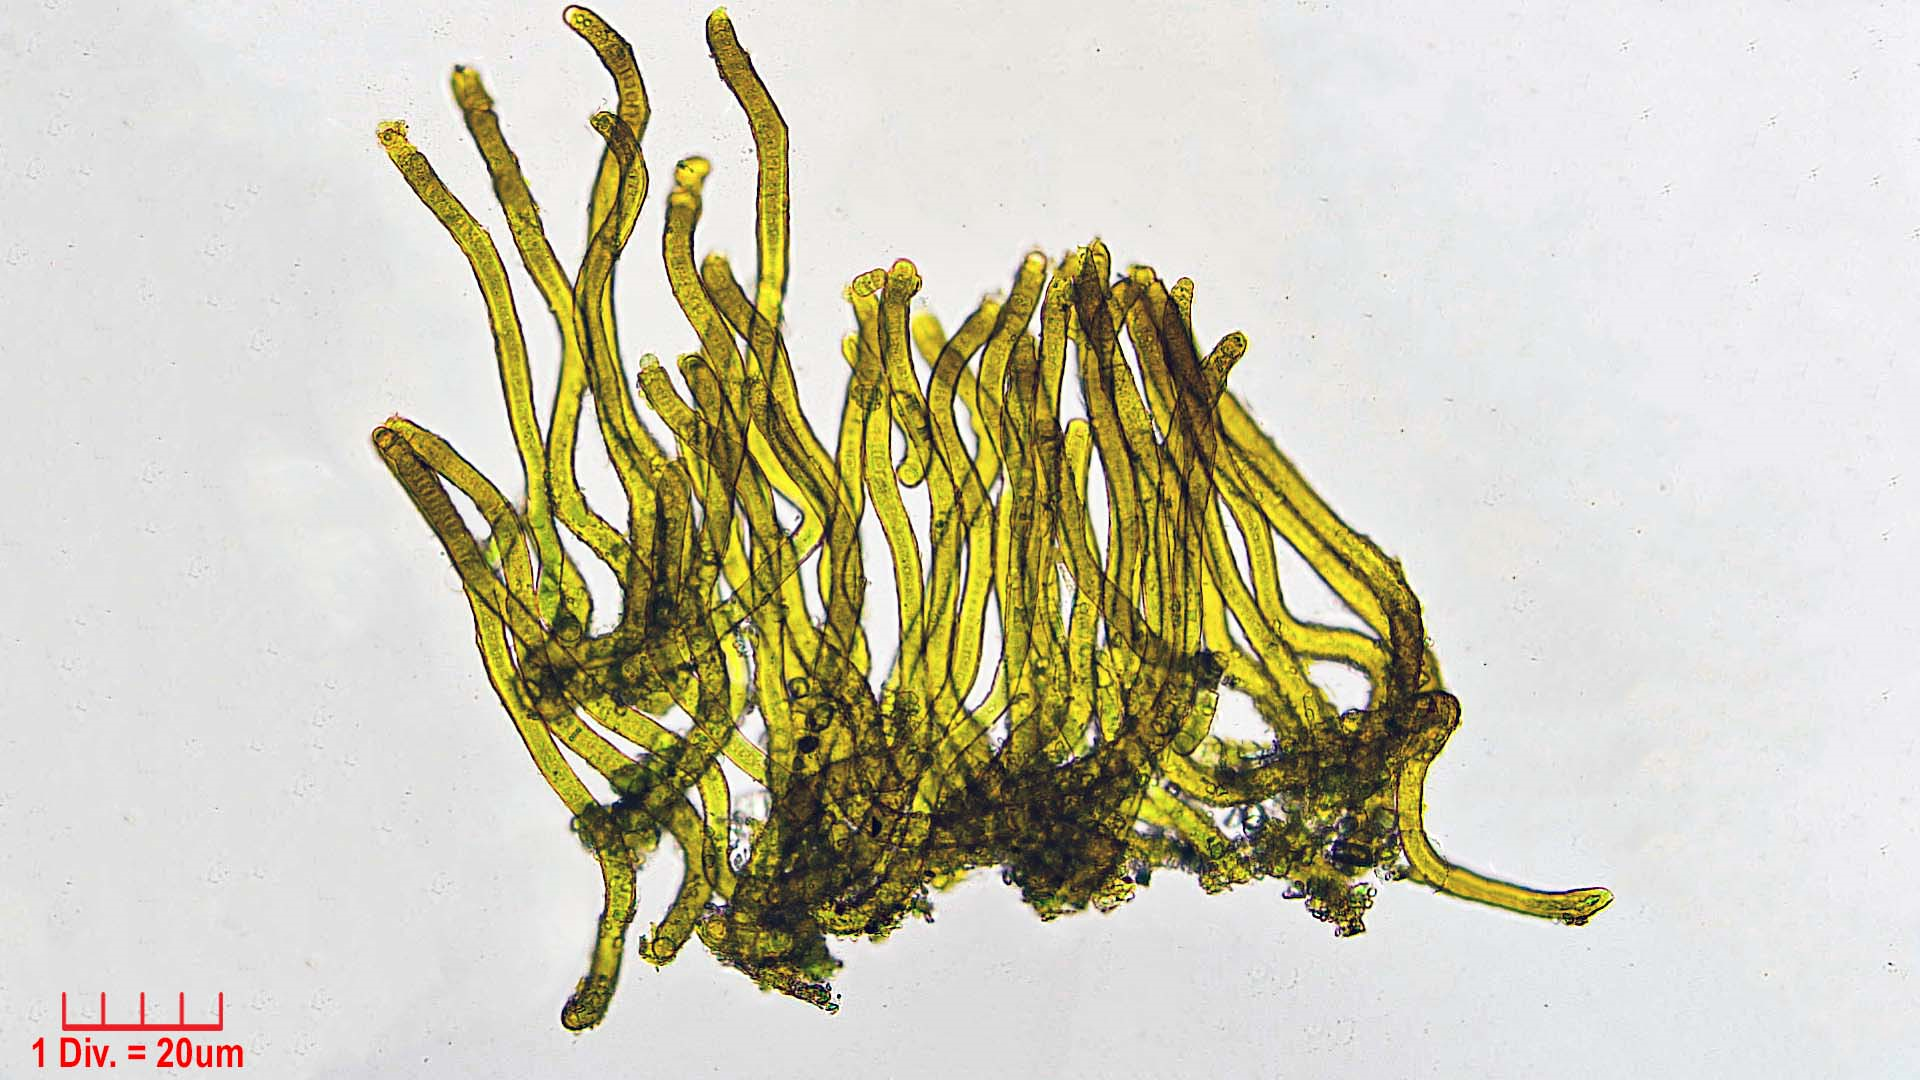 Cyanobacteria/Nostocales/Scytonemataceae/Scytonema/hofmannii/scytonema-hofmannii-390.png